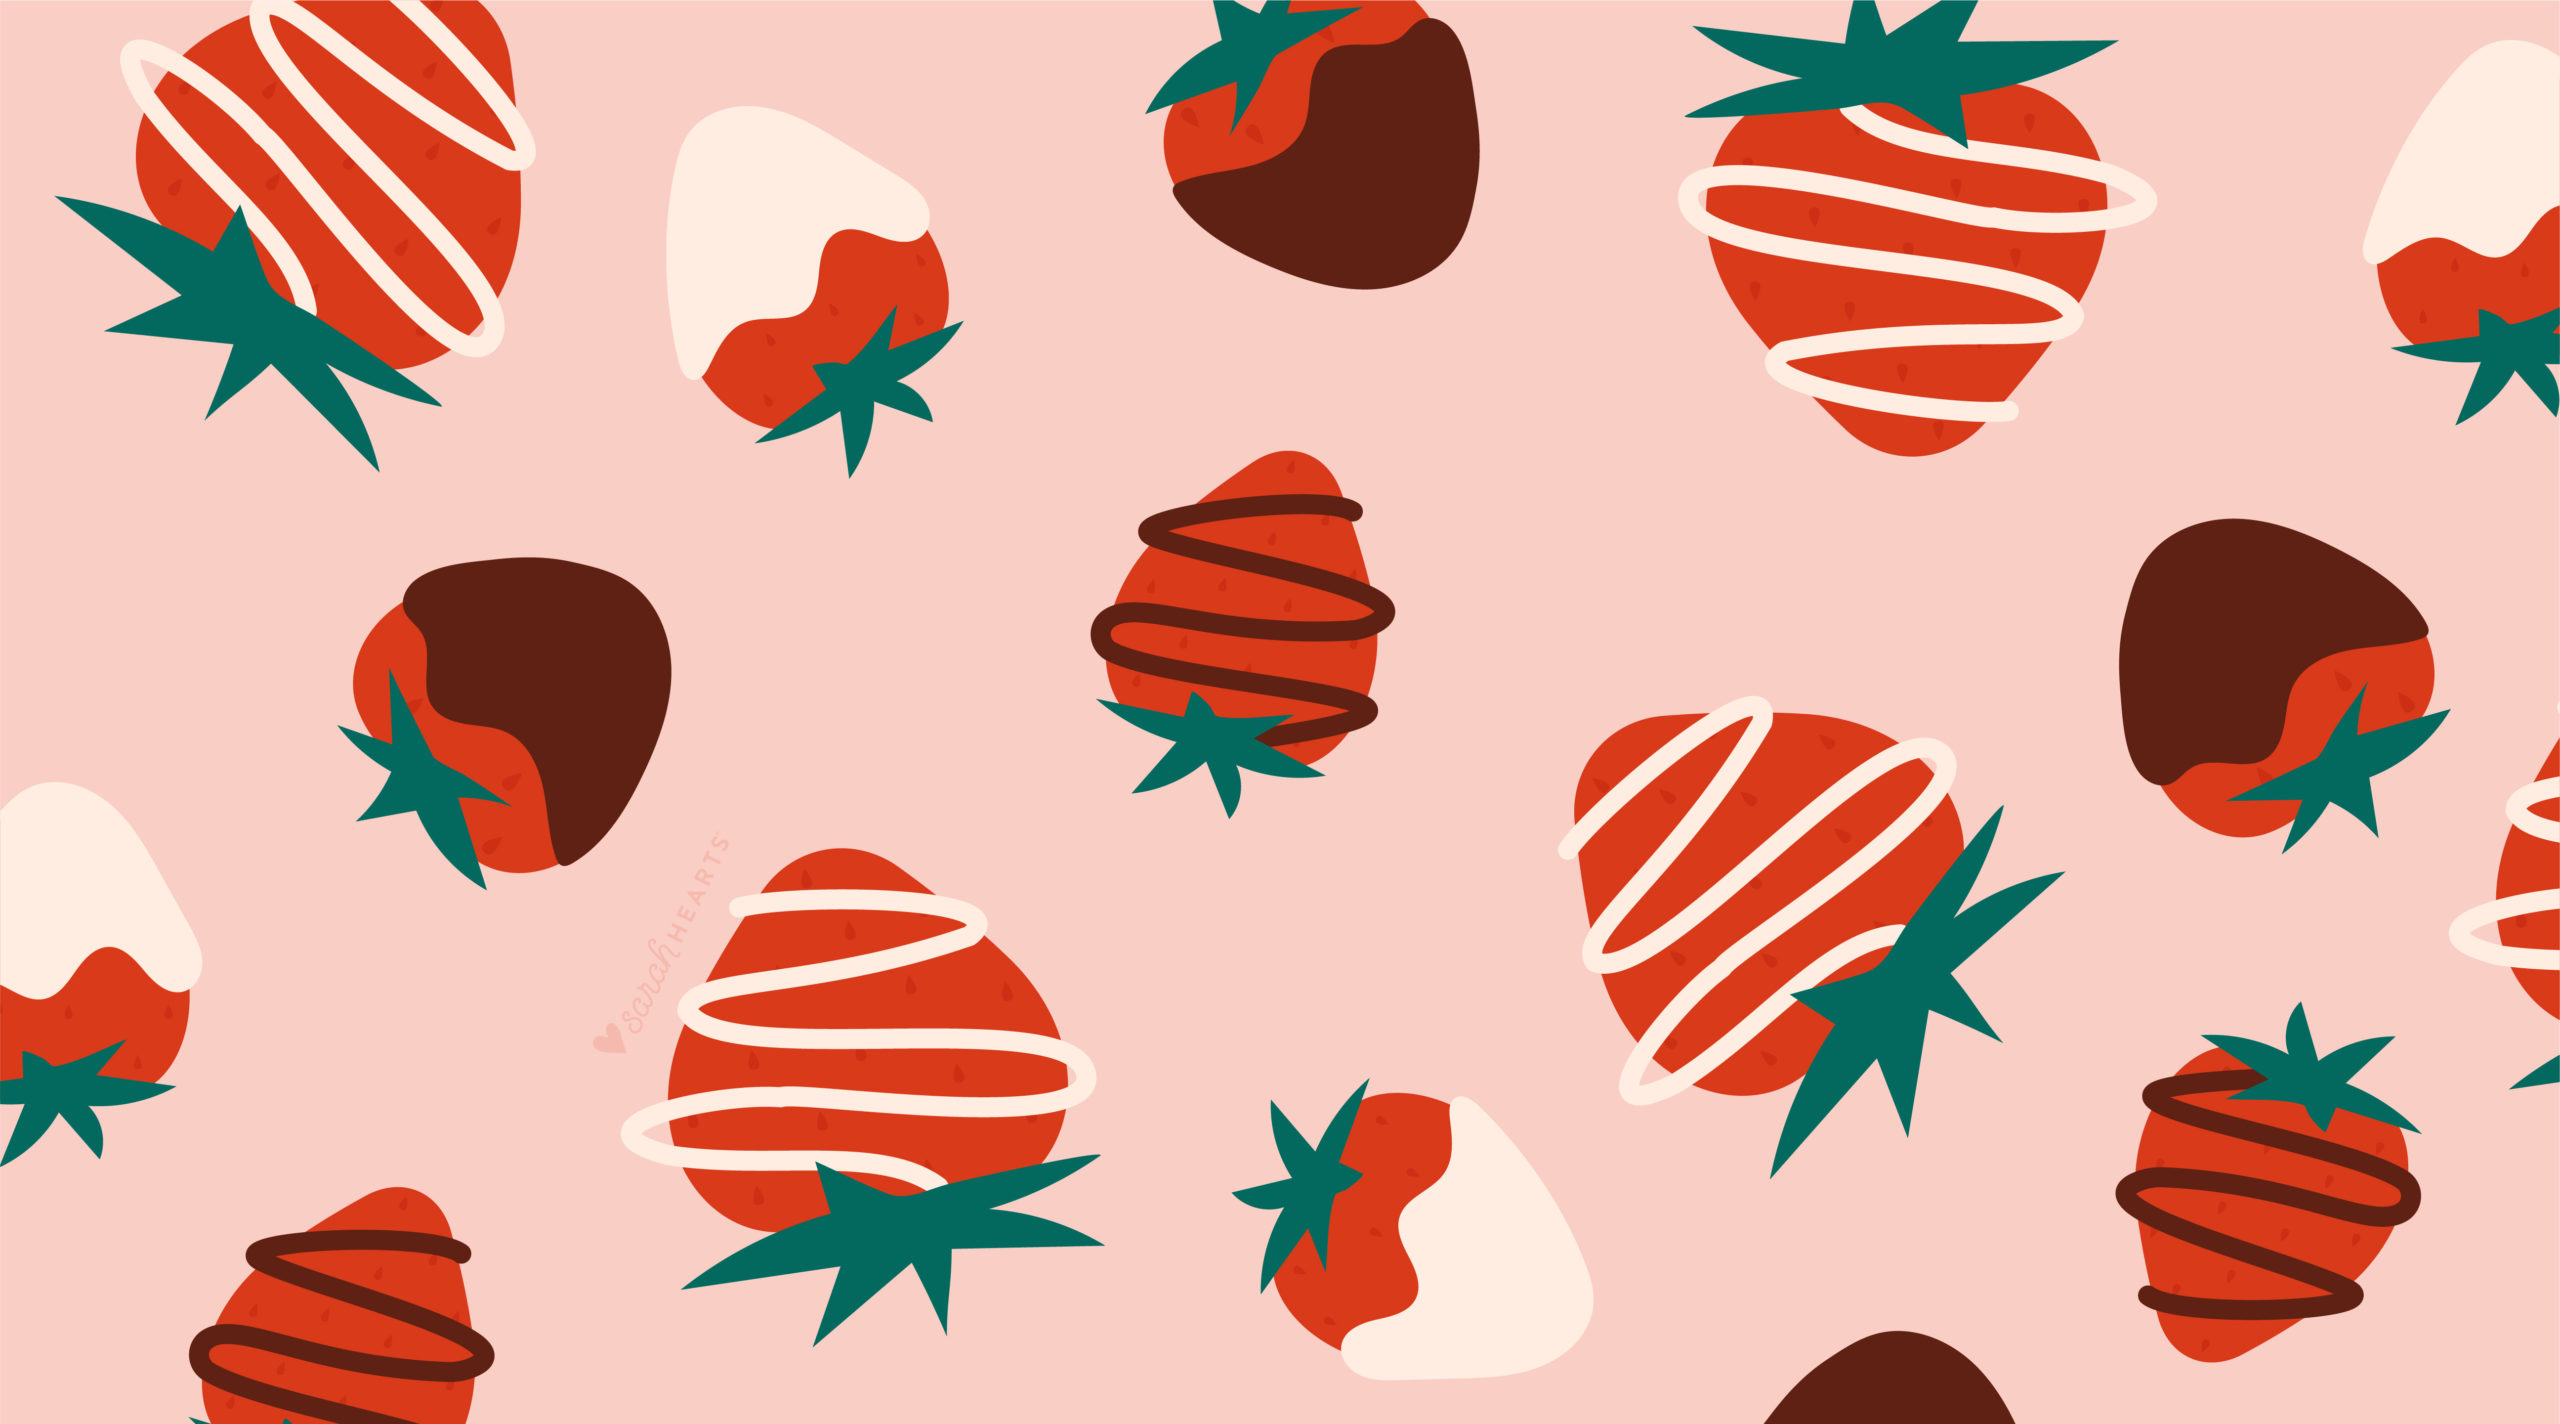 February 2022 Chocolate Dipped Strawberry Calendar Wallpaper - Sarah Hearts